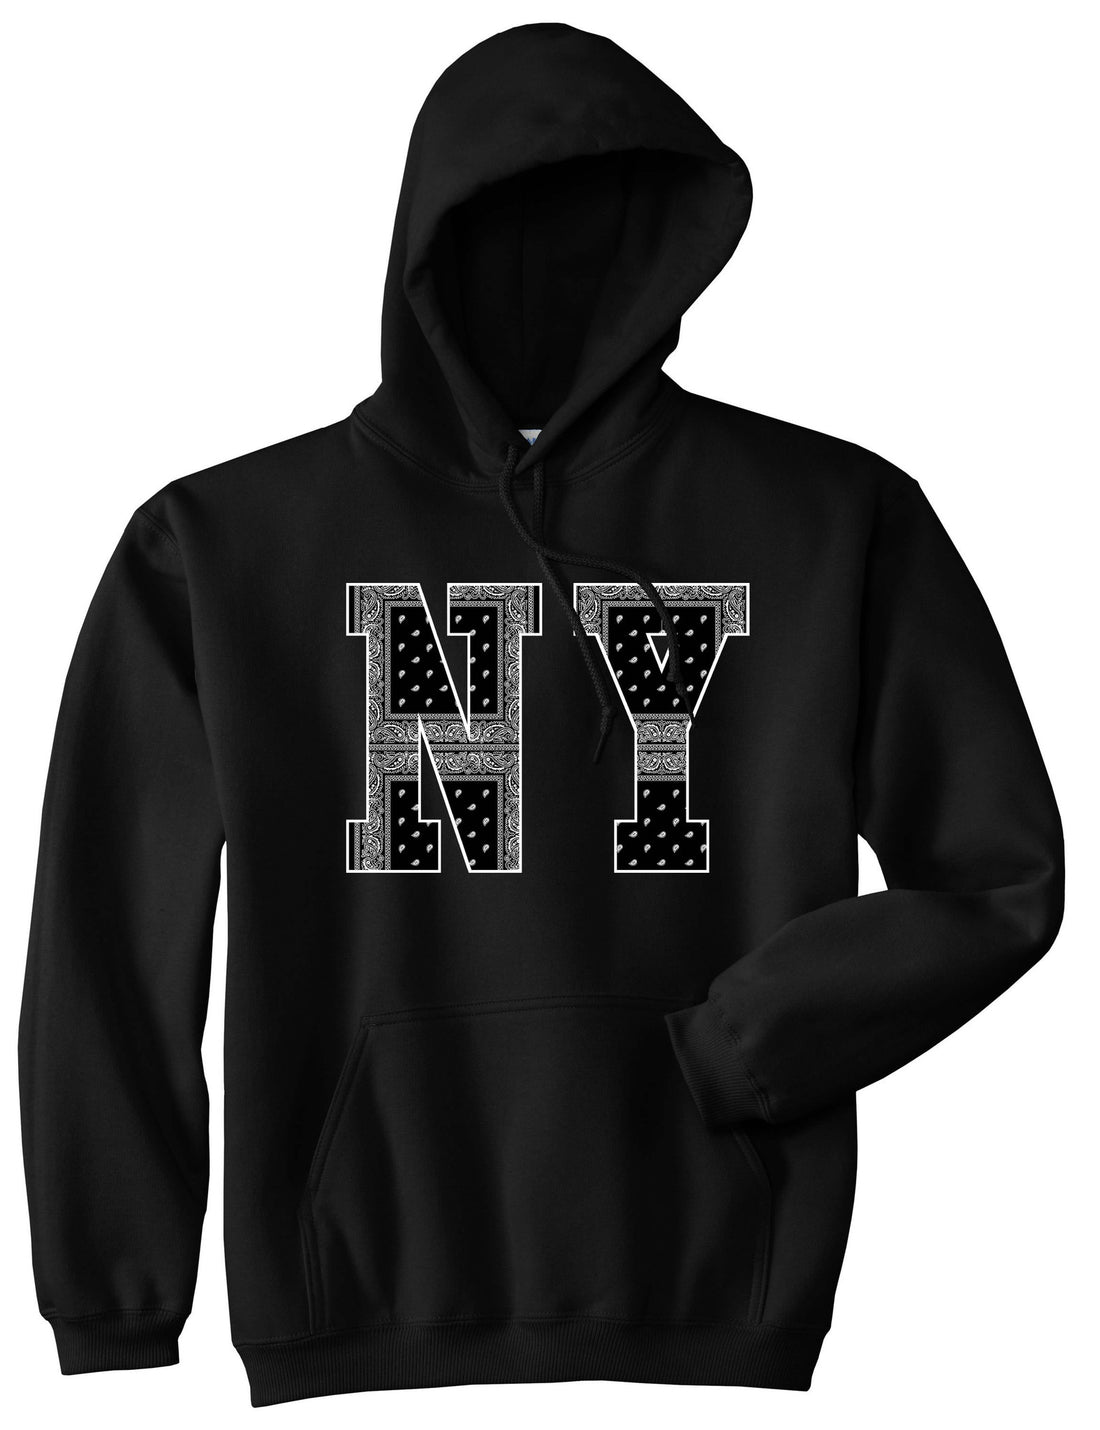 New York Bandana NYC Black by Kings Of NY Gang Flag Boys Kids Pullover Hoodie Hoody In Black by Kings Of NY